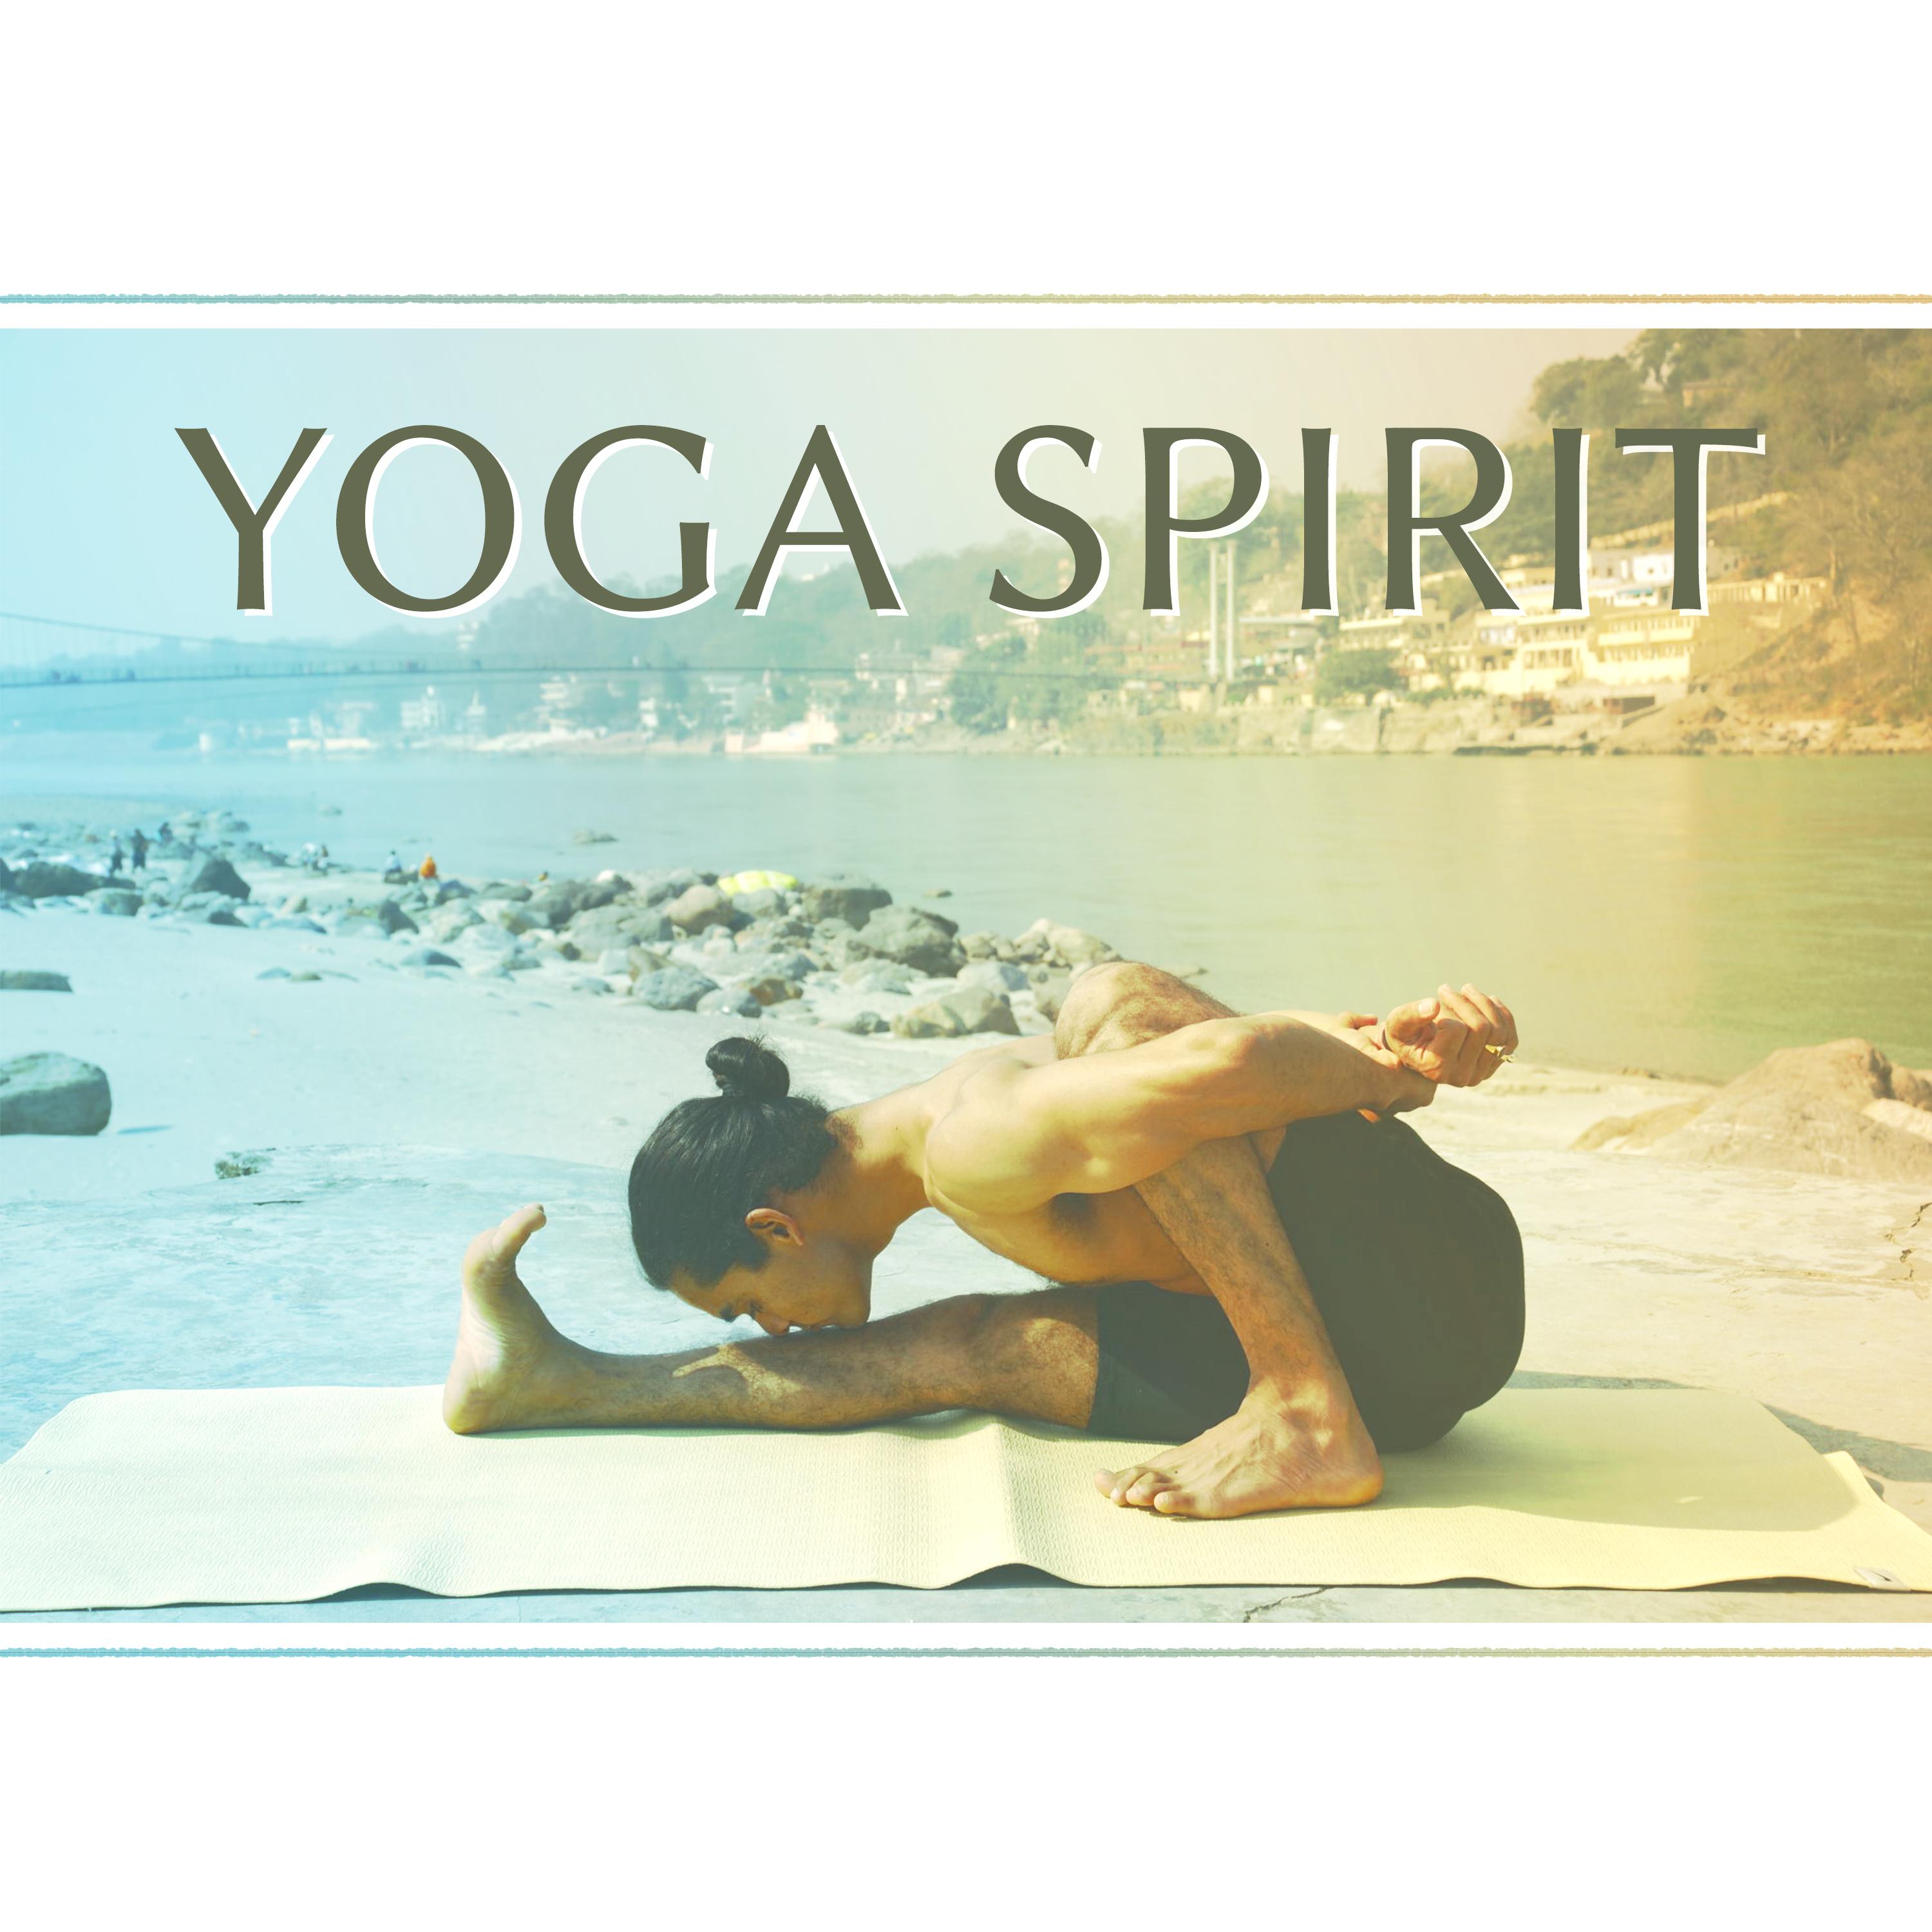 Yoga Spirit – Meditation Music for Free Your Body